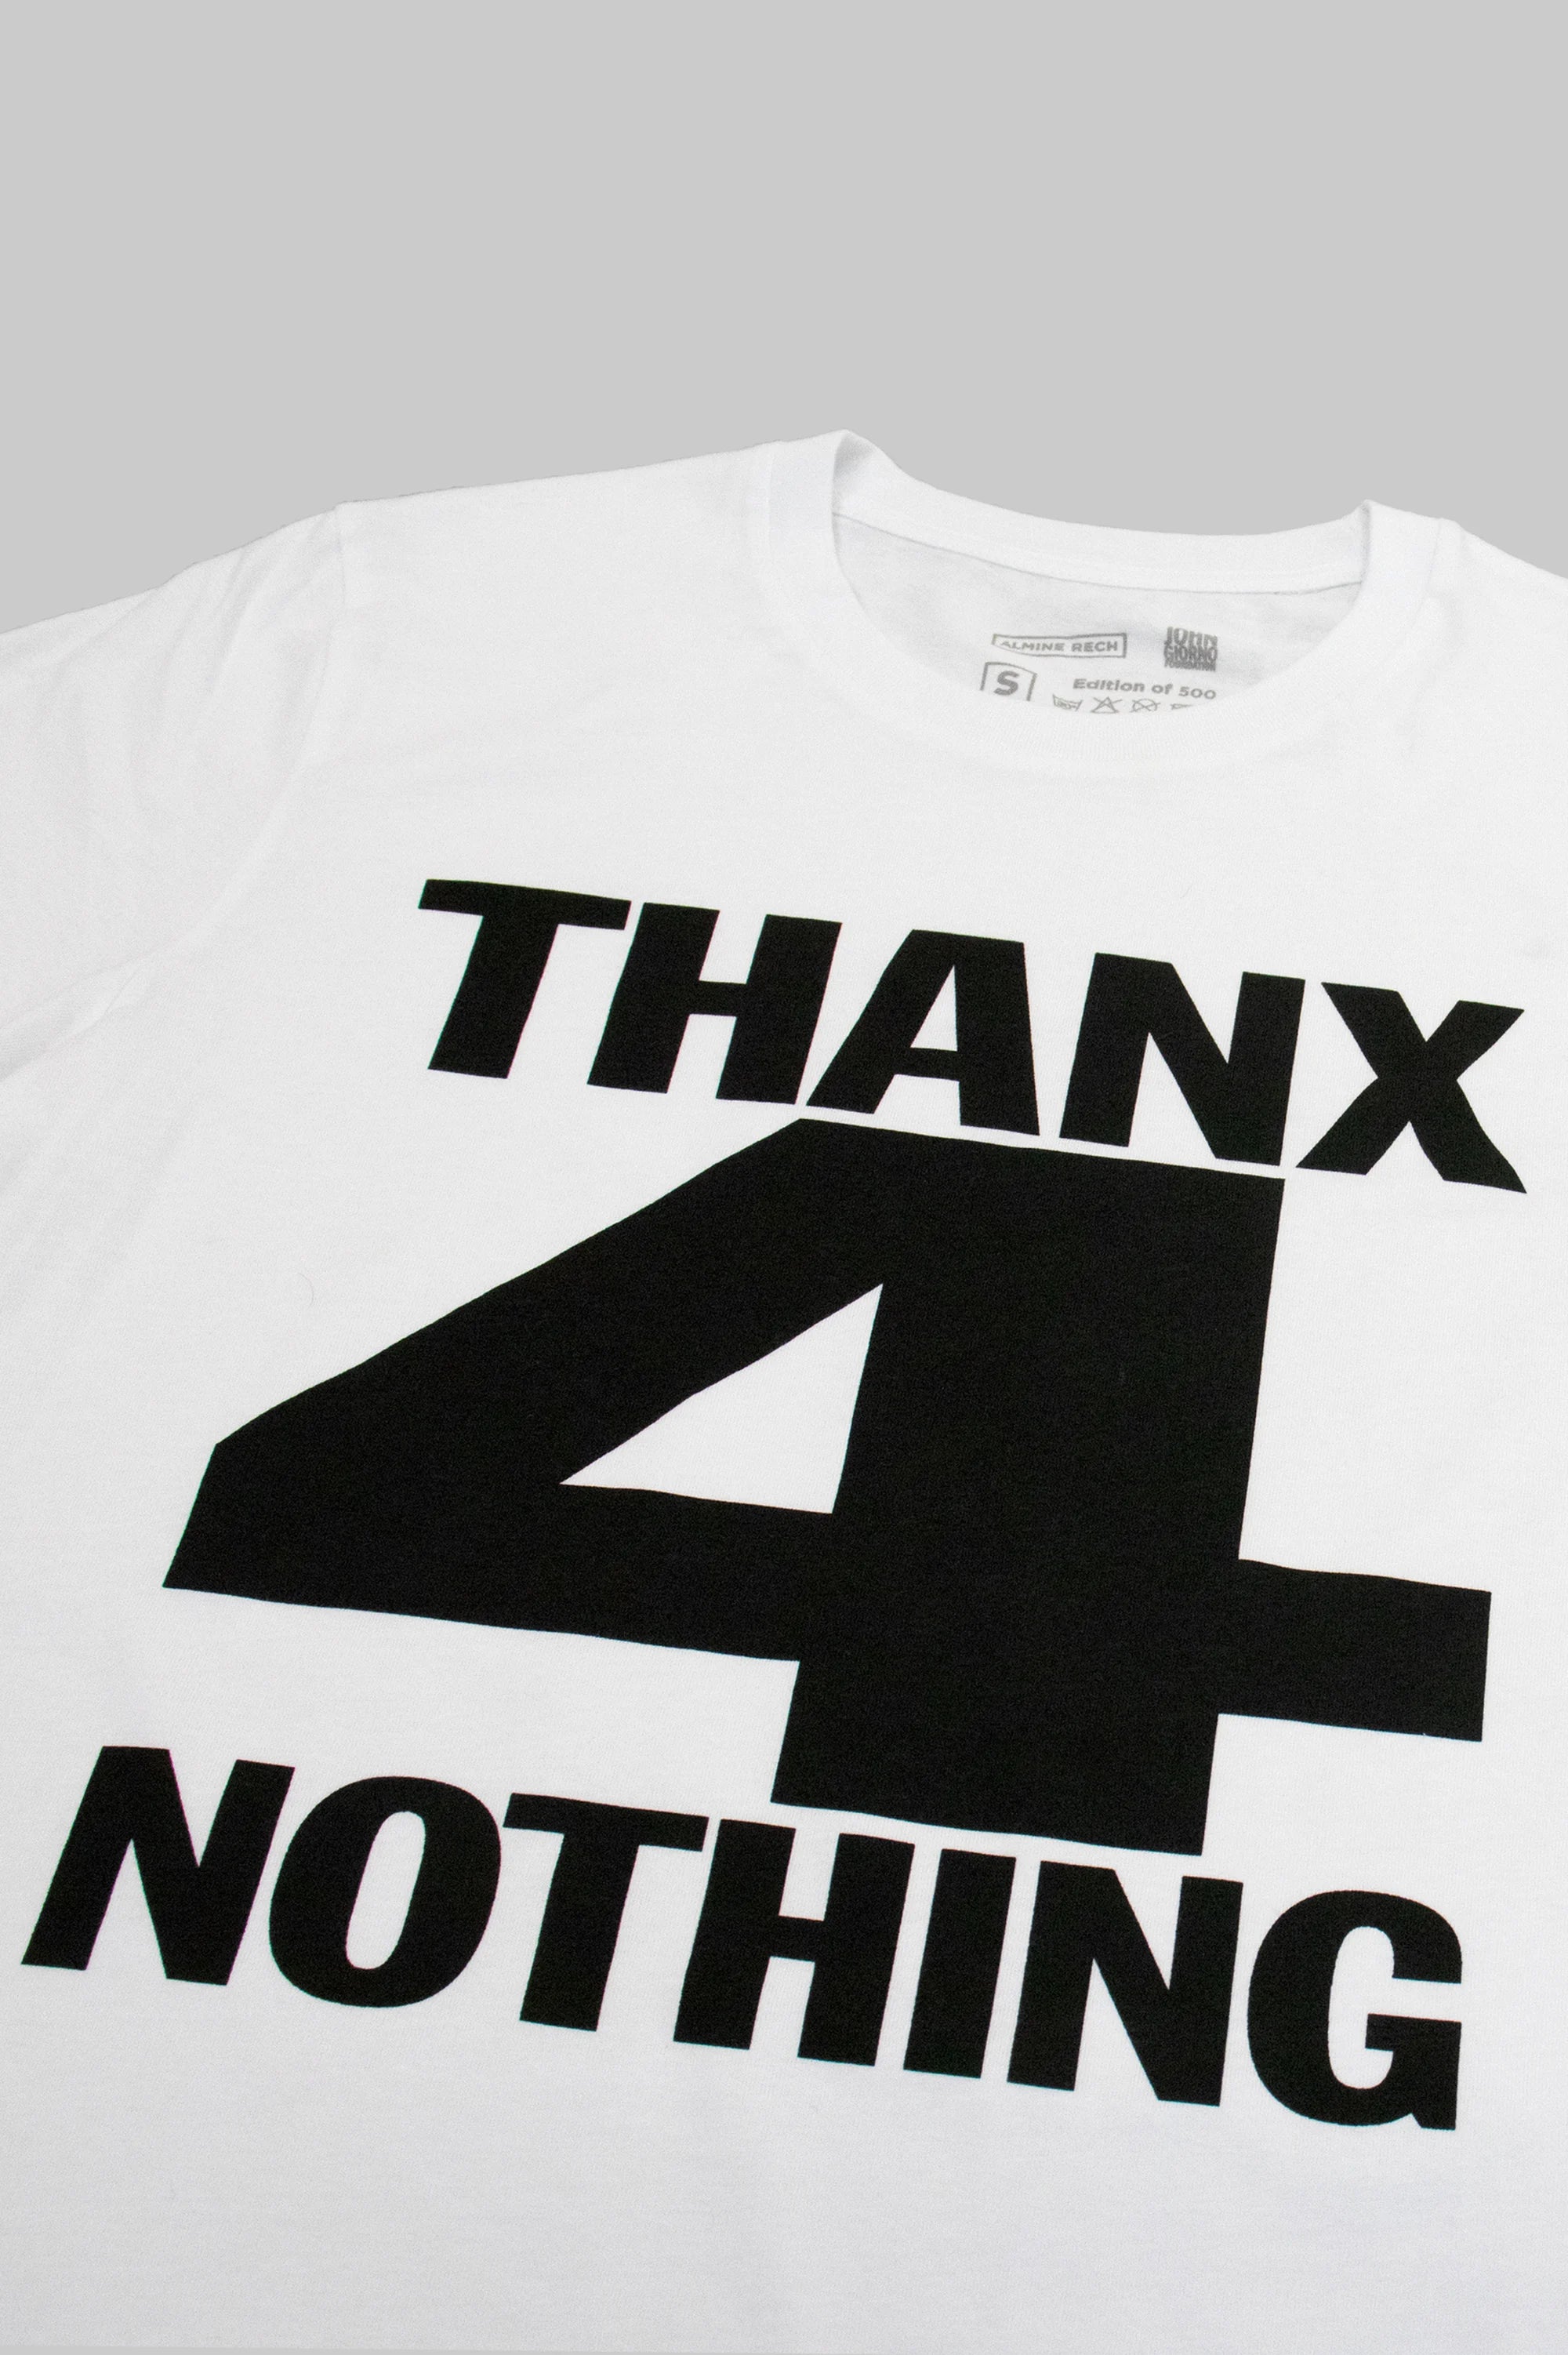 Thanx 4 Nothing - T-shirt